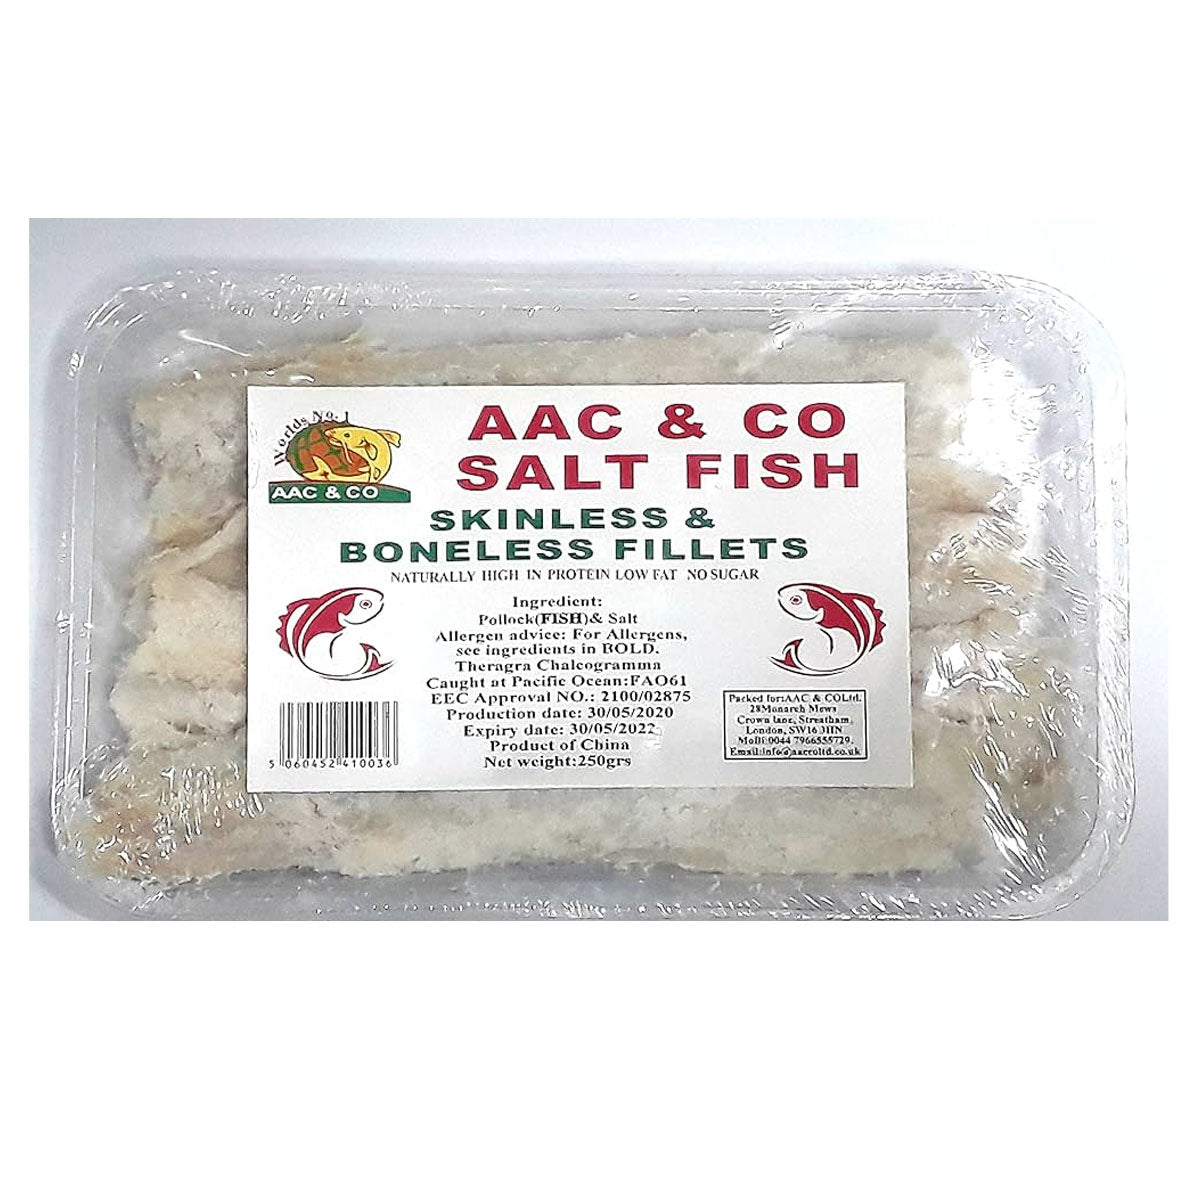 AAC & CO - Skinless & Boneless Salt Fish Fillets - 250g salt fish fillets.